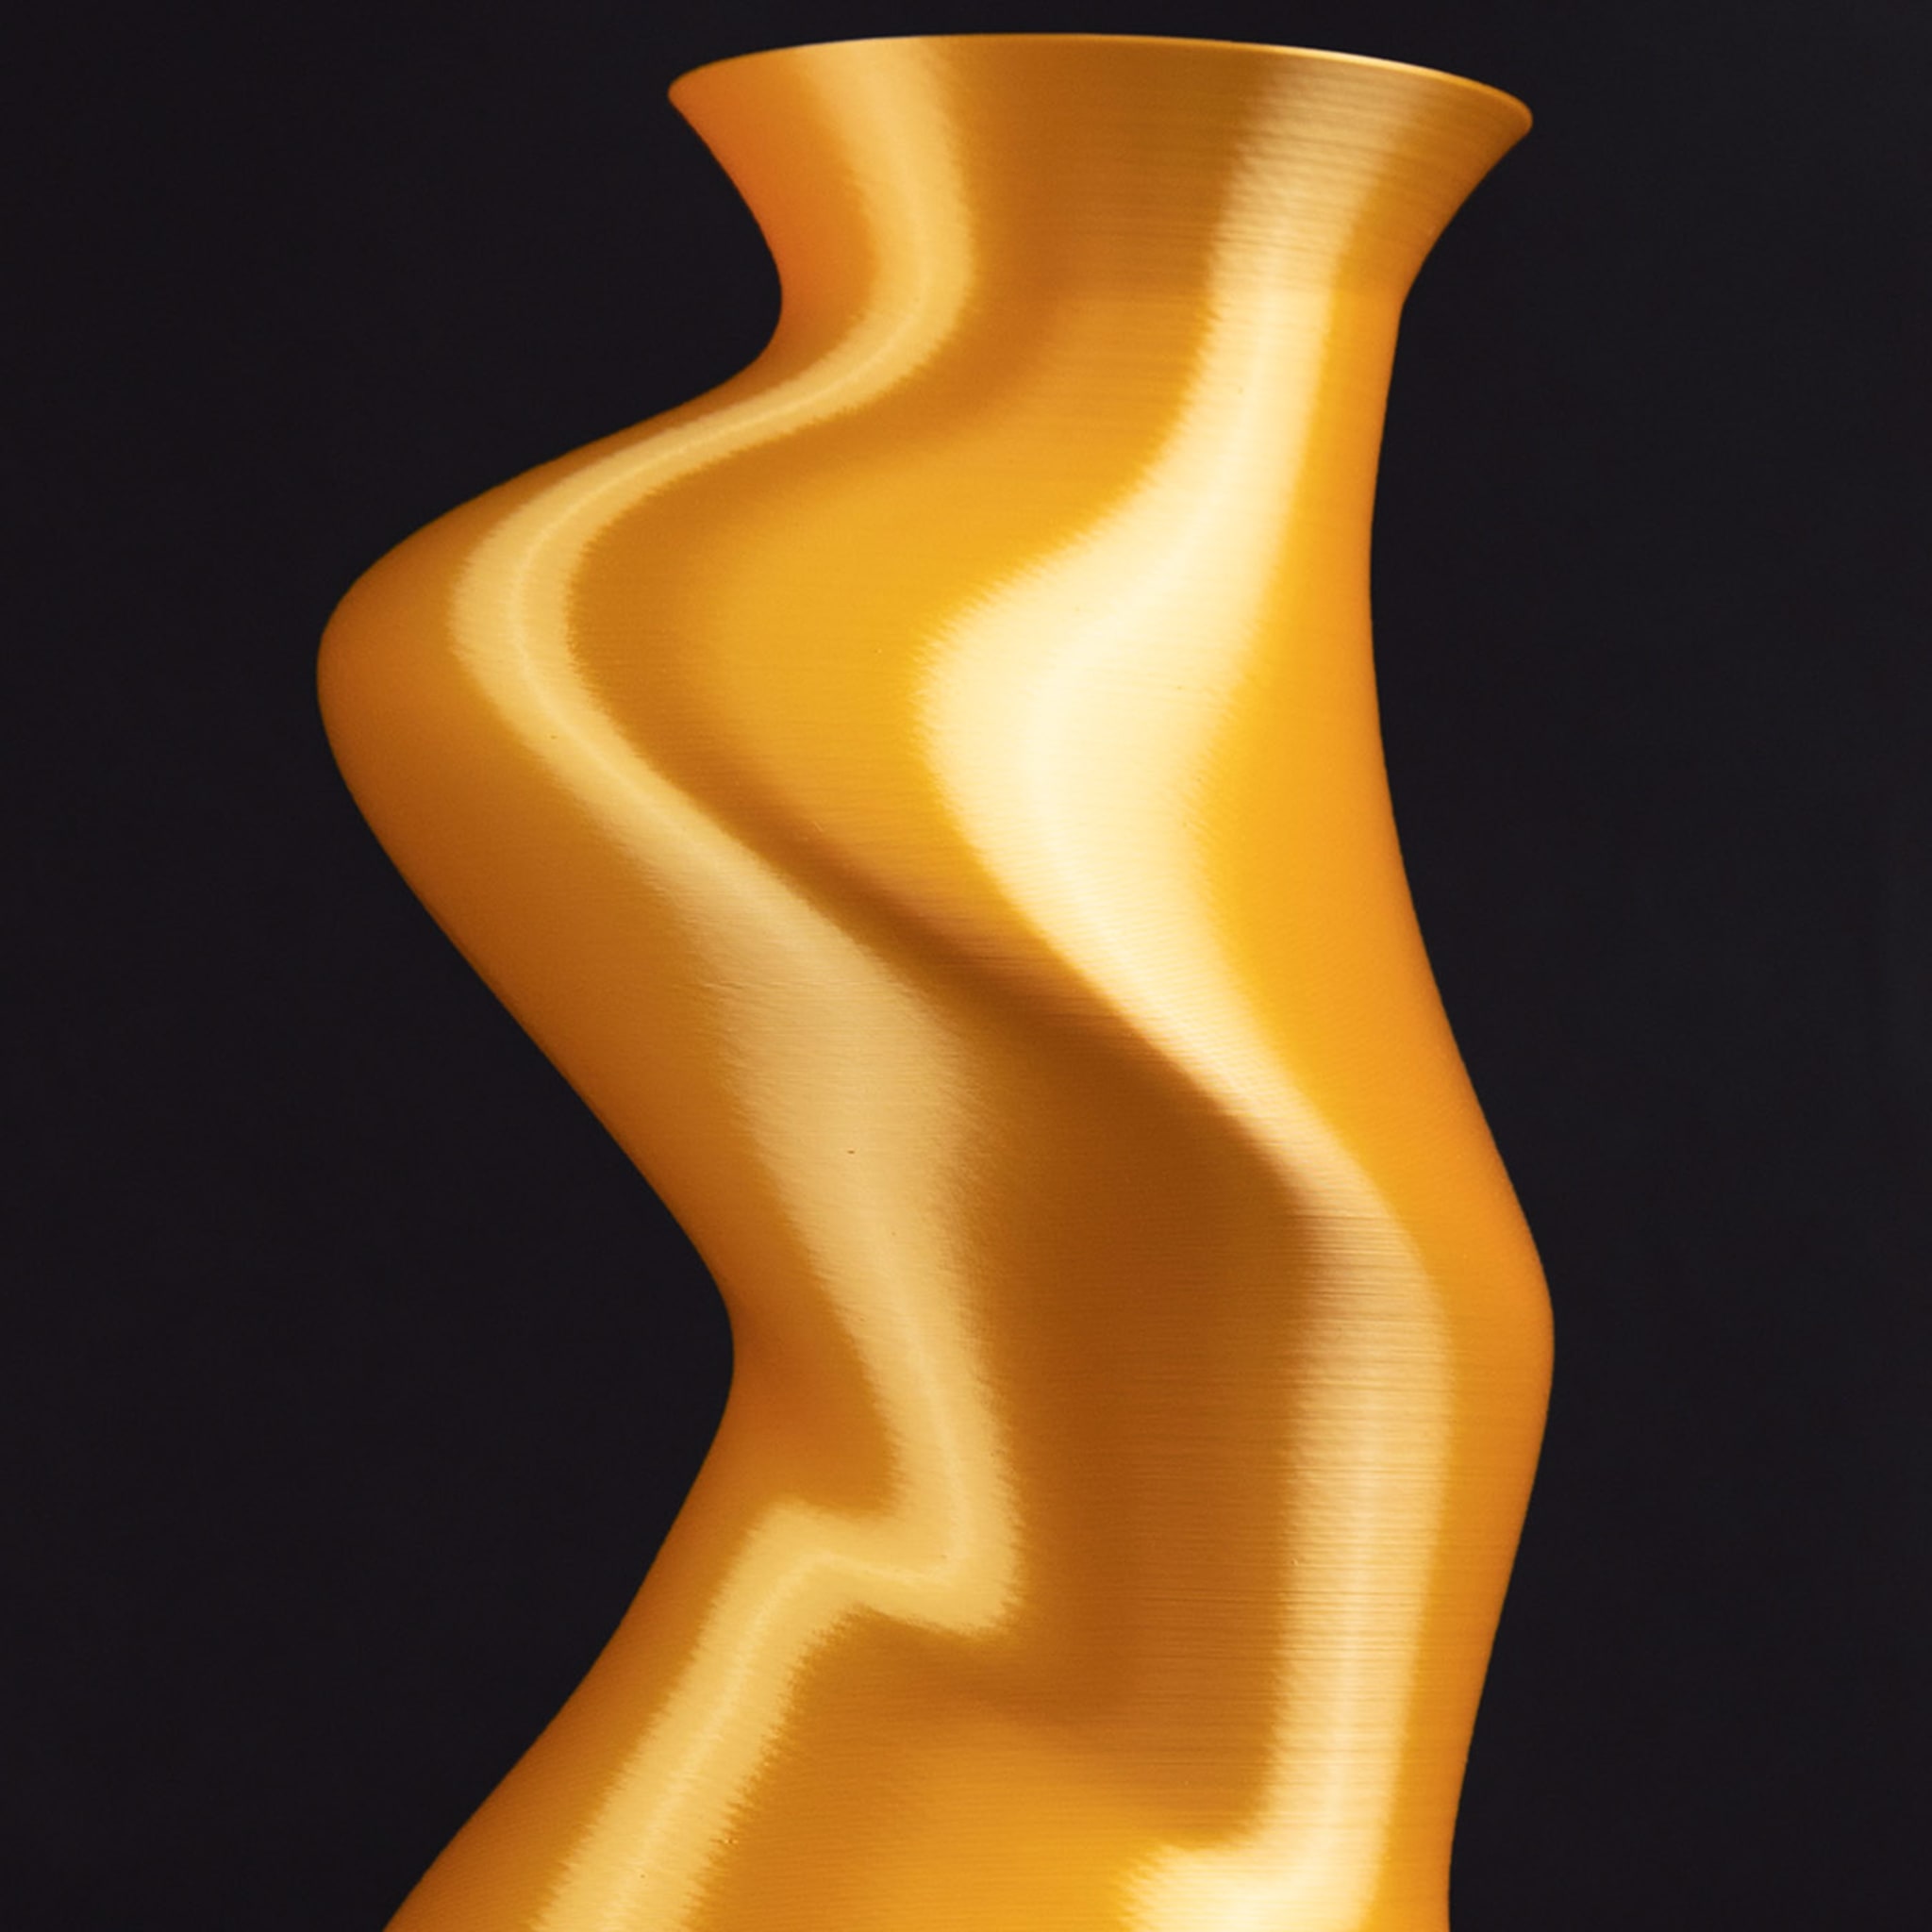 Vega Golden Vase-Sculpture  - Alternative view 4